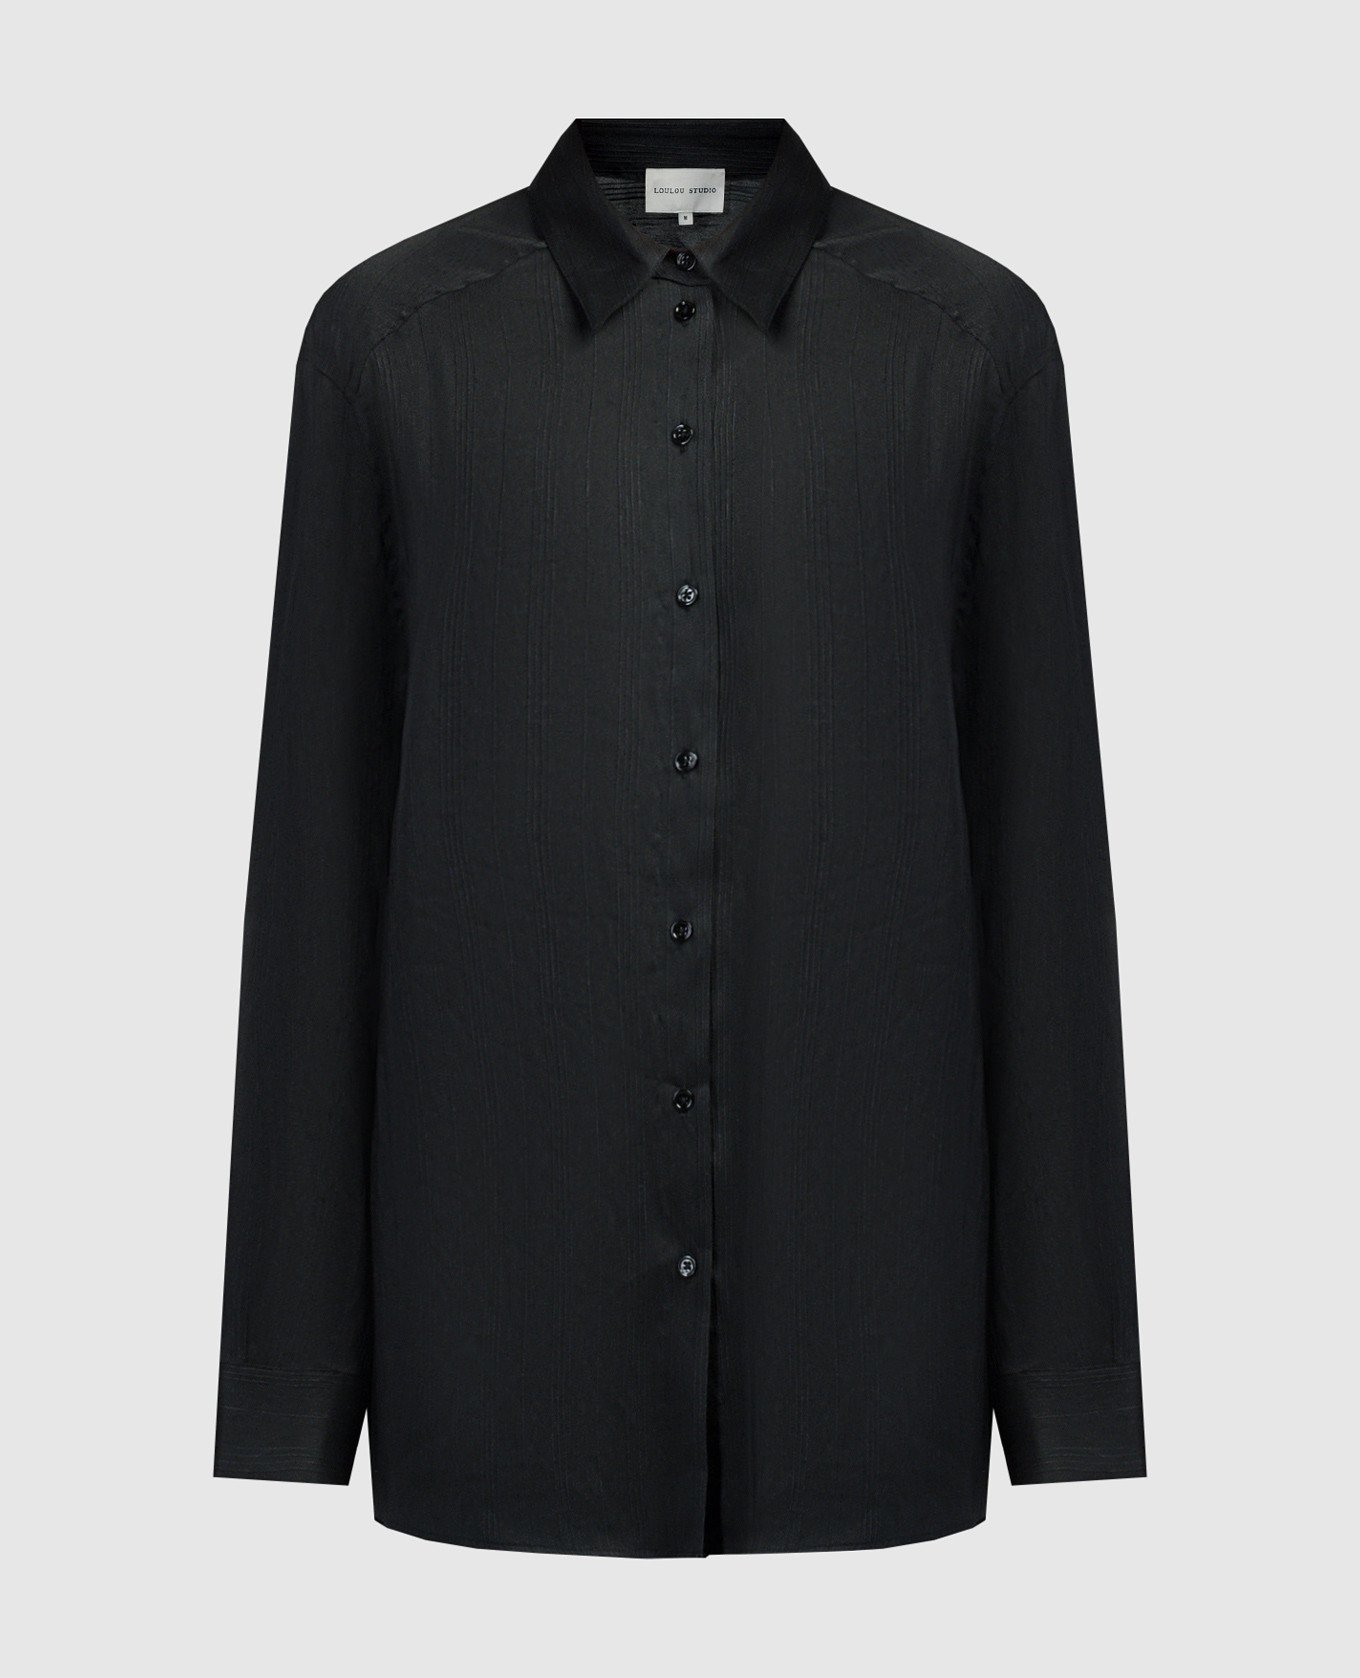 Черная рубашка CANISA из льна и шелка